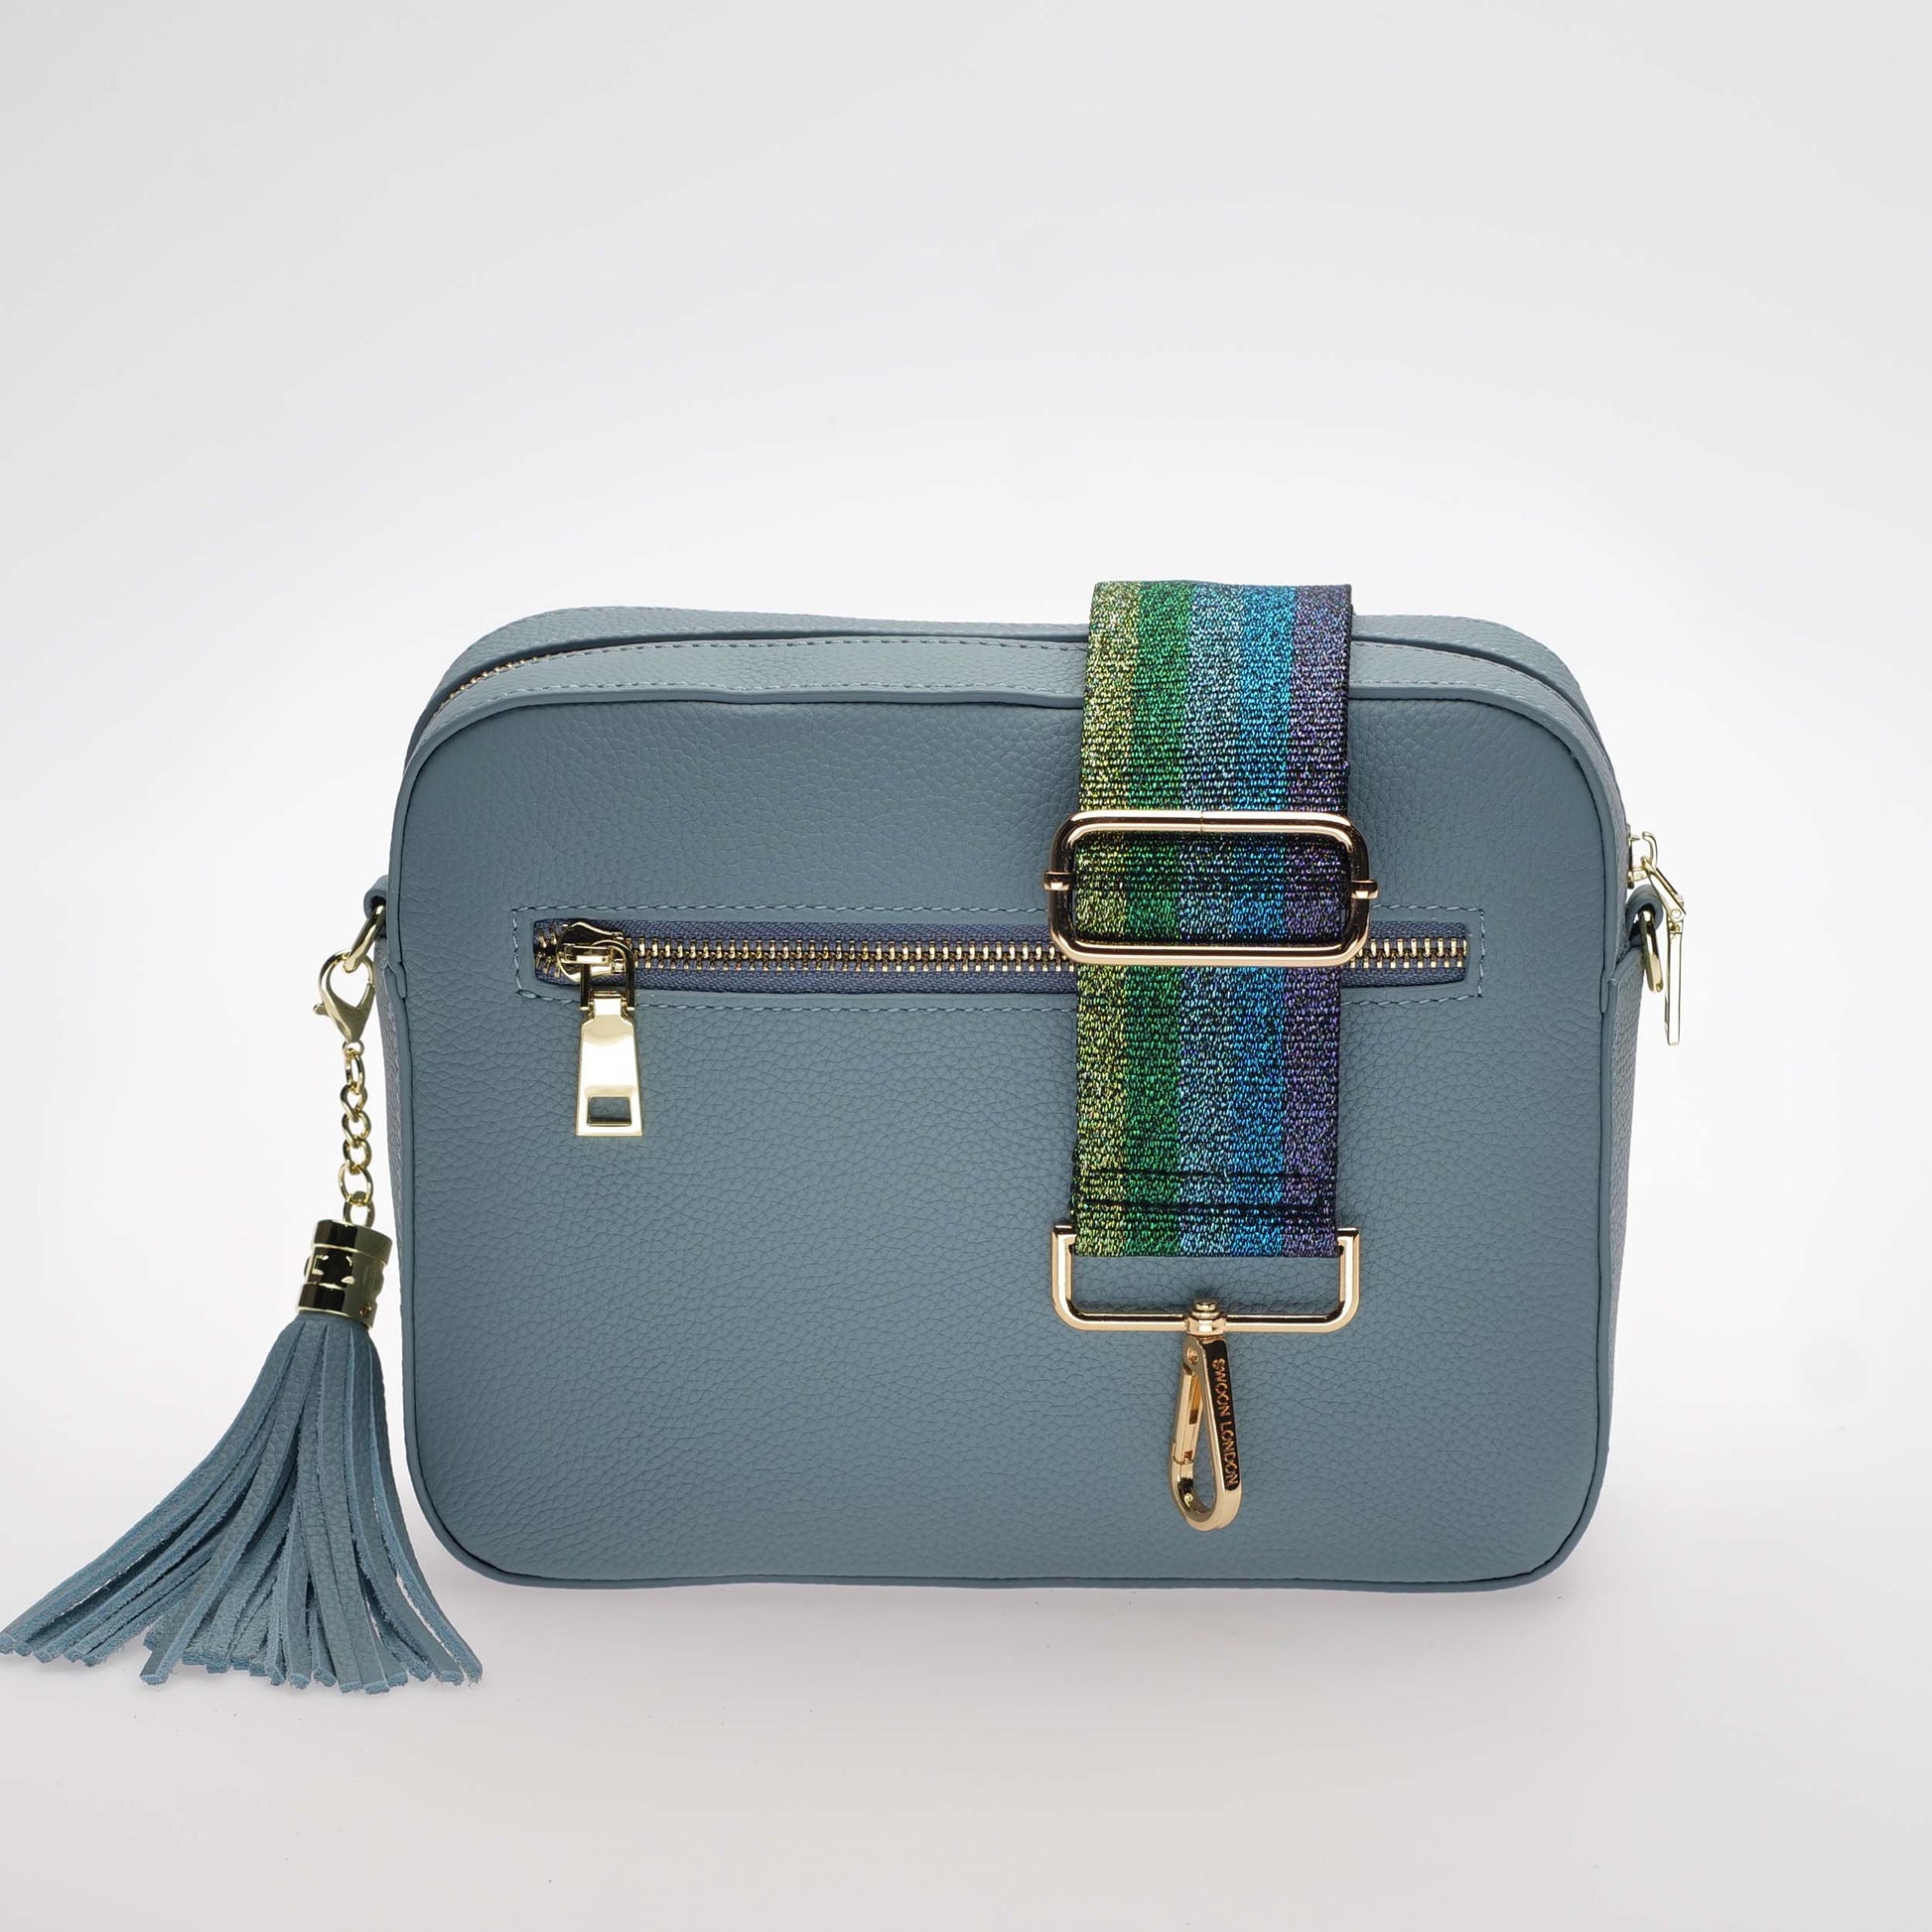 Blue Rainbow Metallic Bag Strap by Swoon London